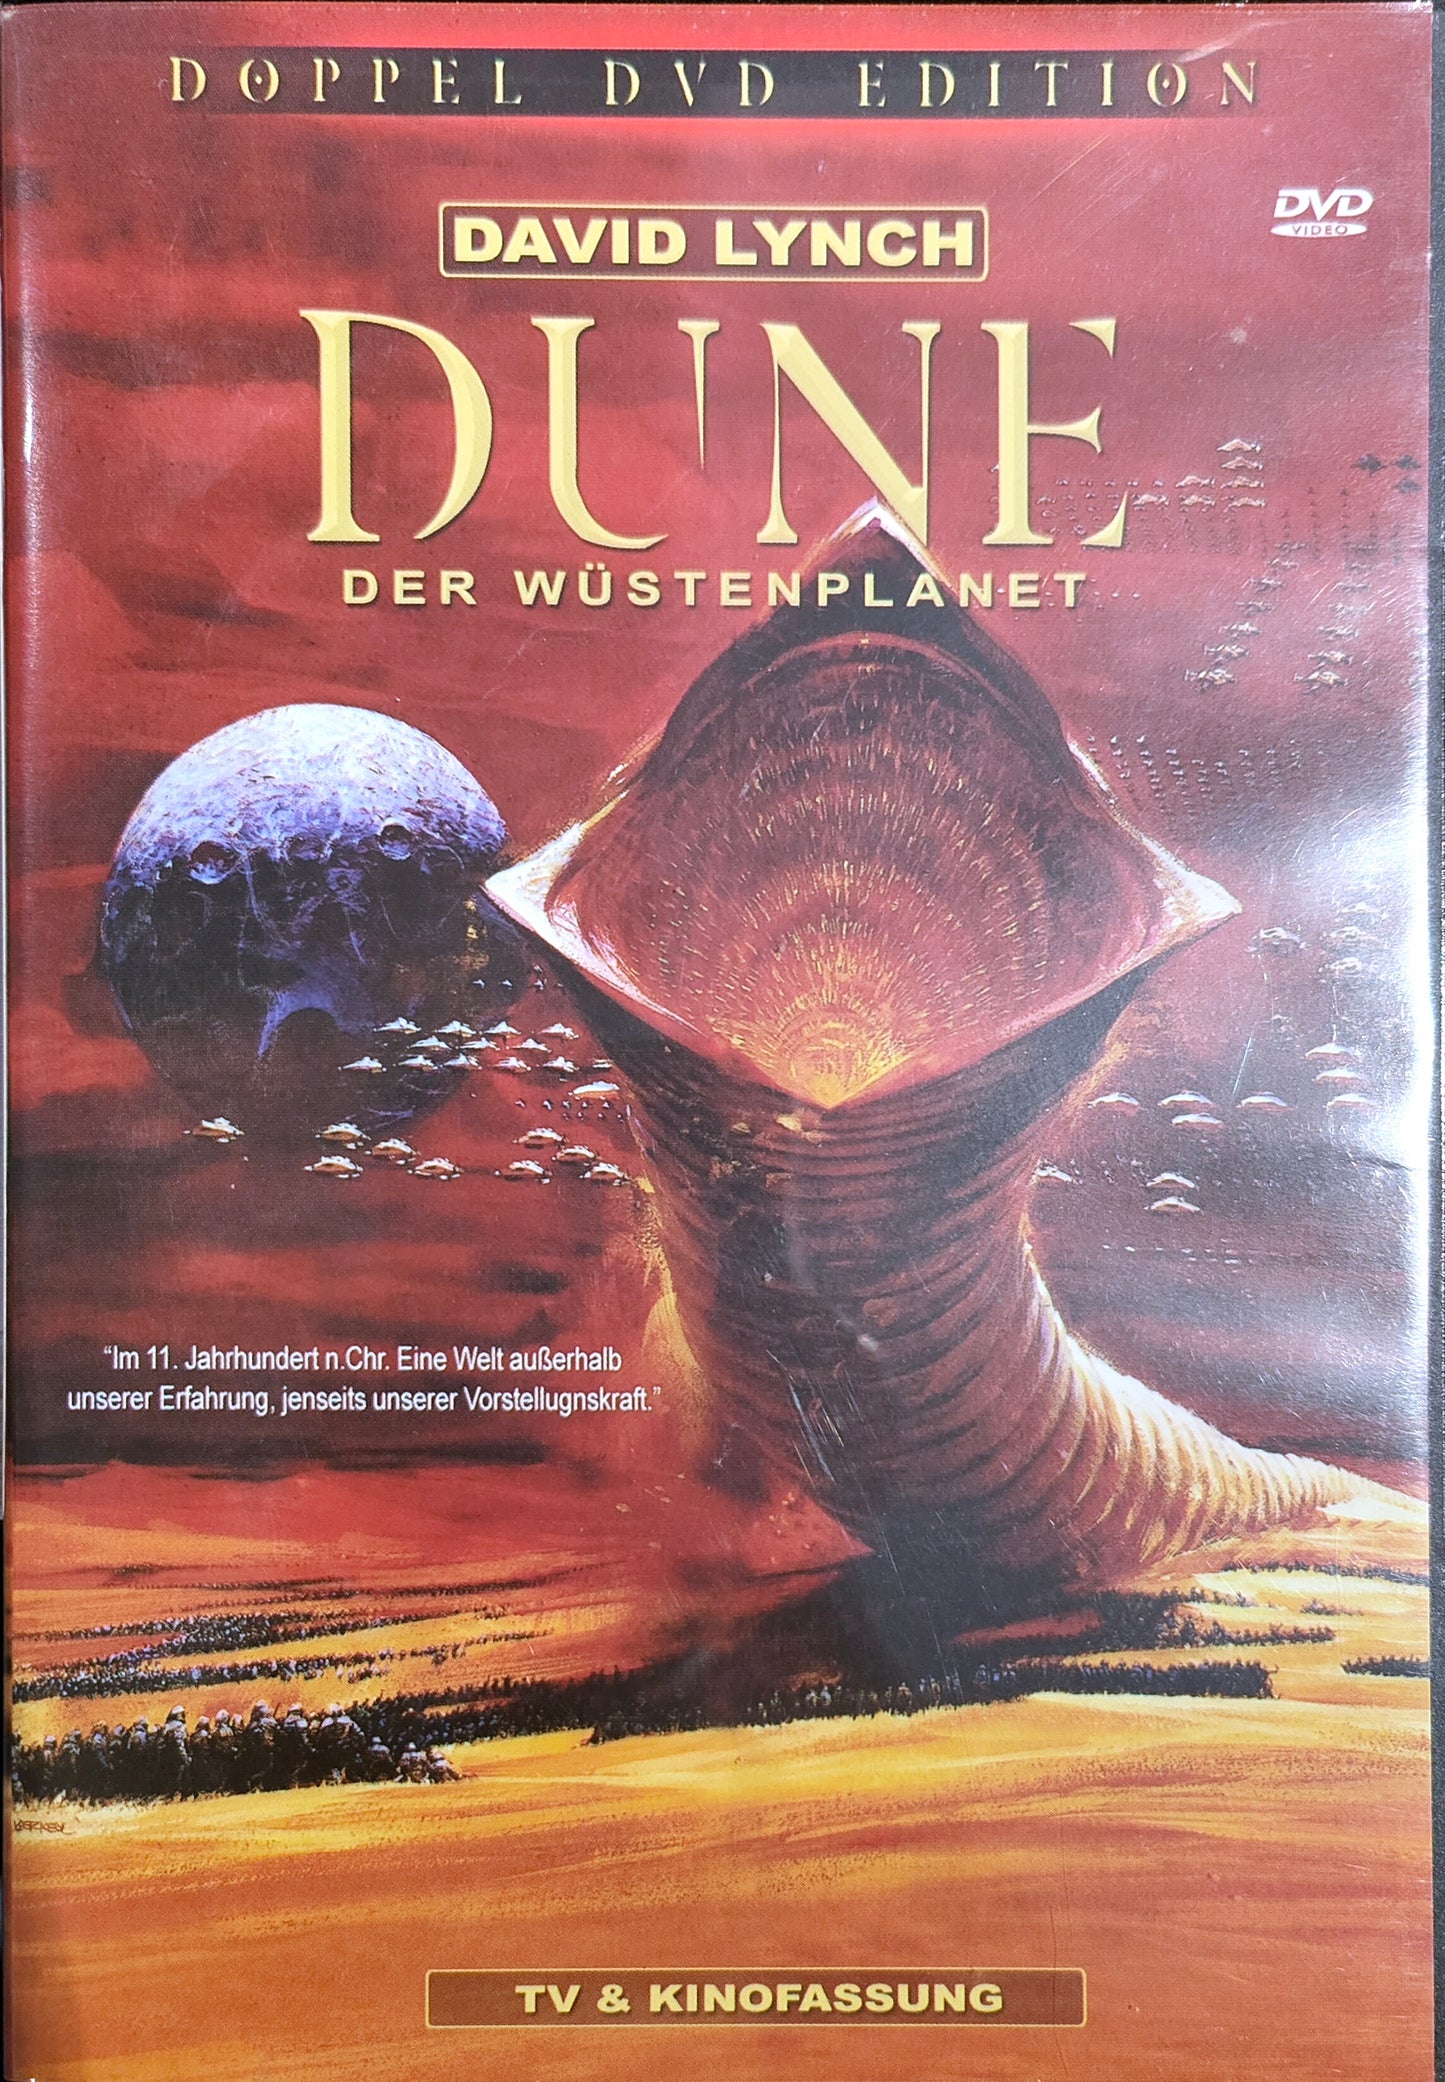 DVD Dune Der Wustenplanet Doppel Edition 2 CD´s - USADO